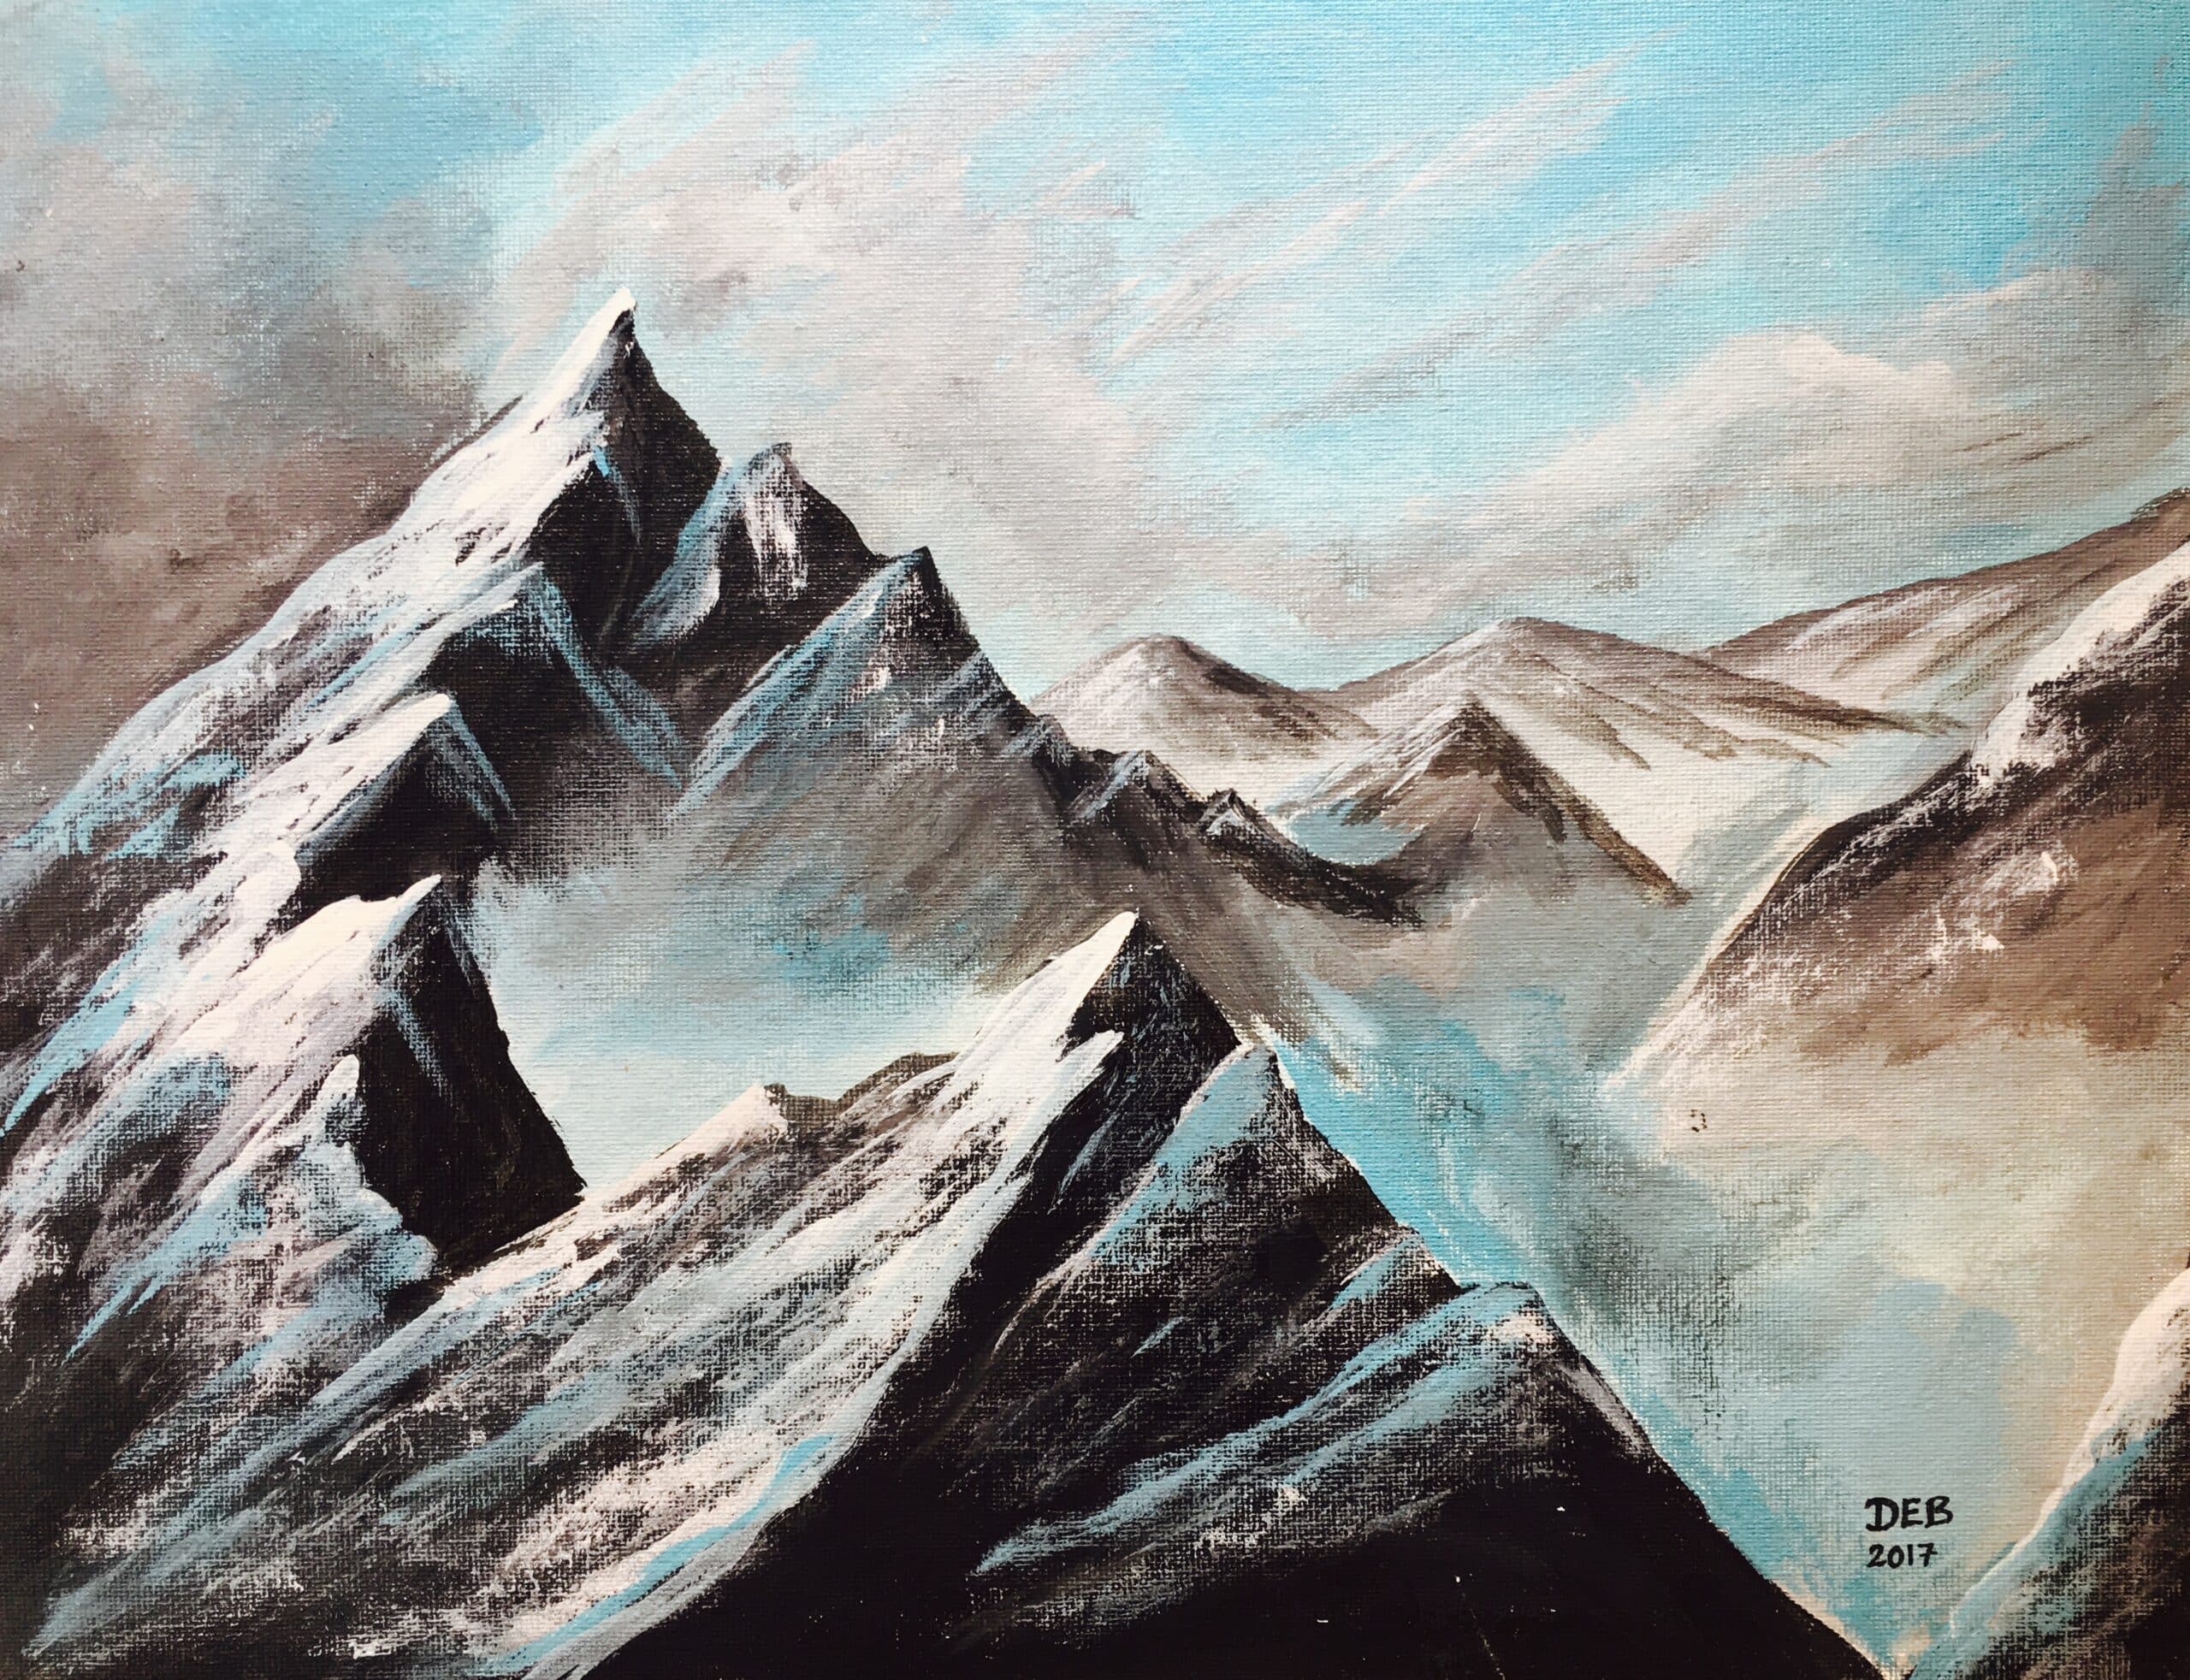 simple mountain paintings